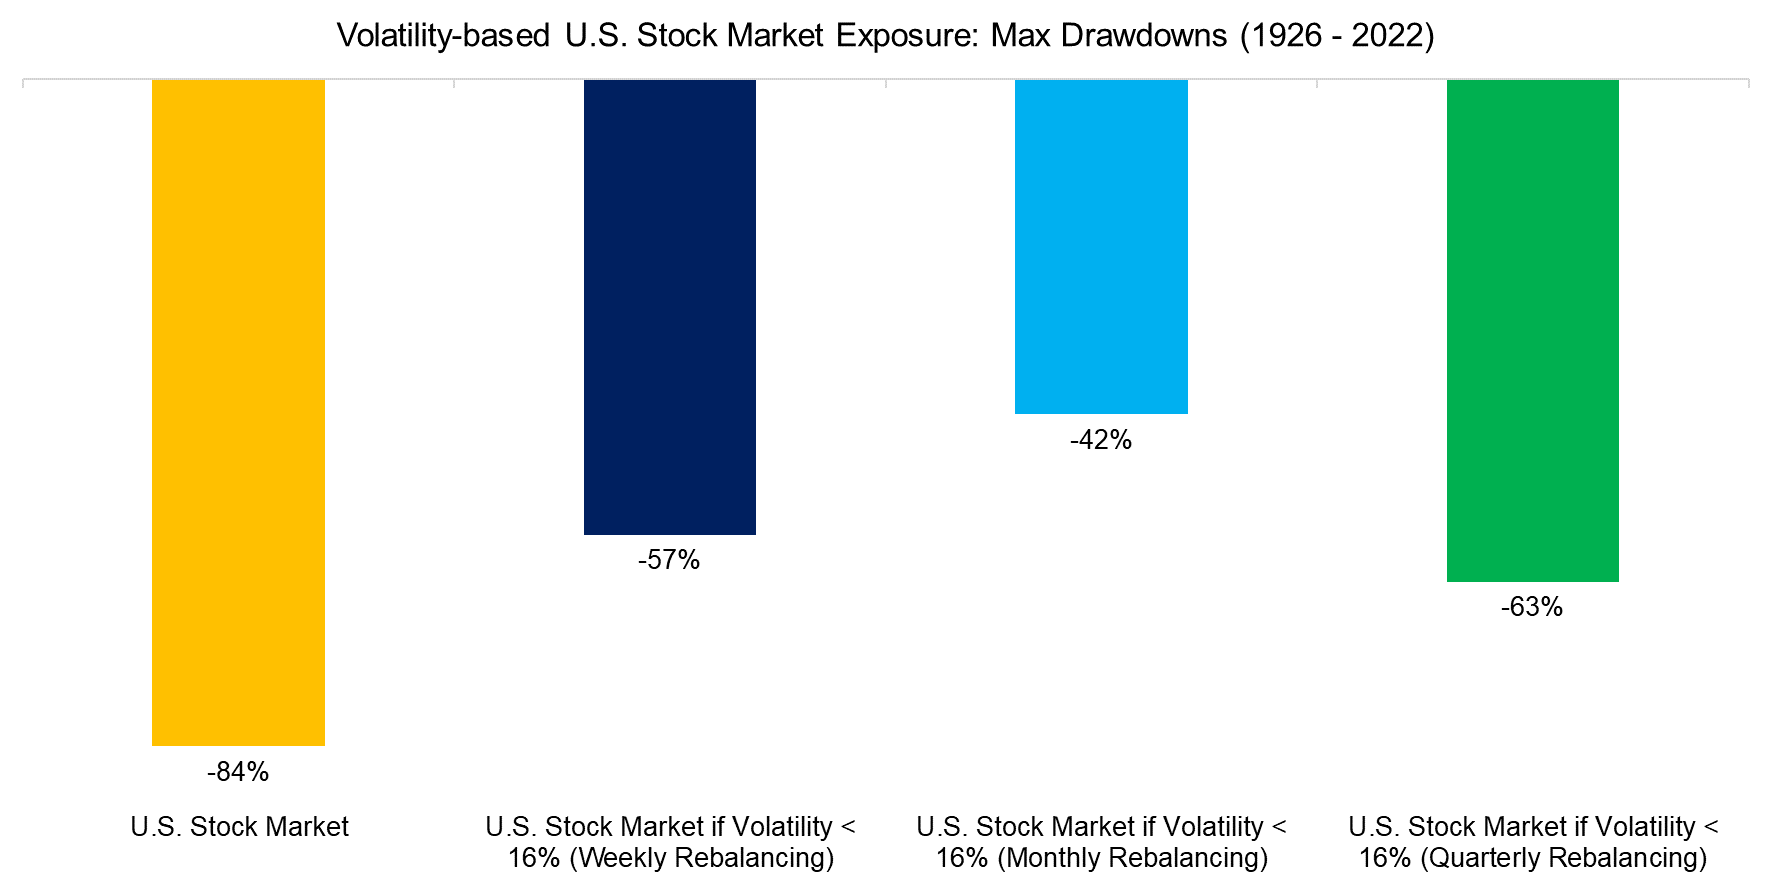 Volatility-based U.S. Stock Market Exposure Max Drawdowns (1926 - 2022)